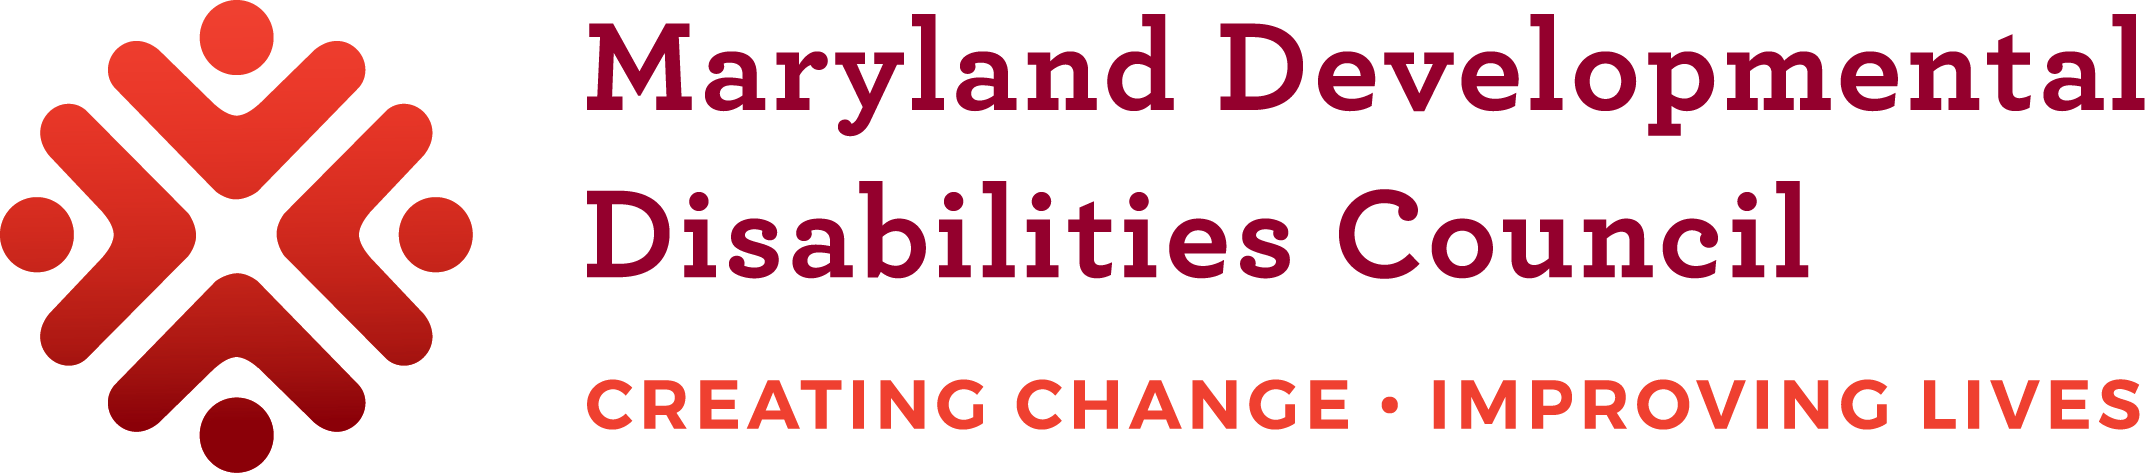 MDDC Logo Maryland Development Disabilities Council 